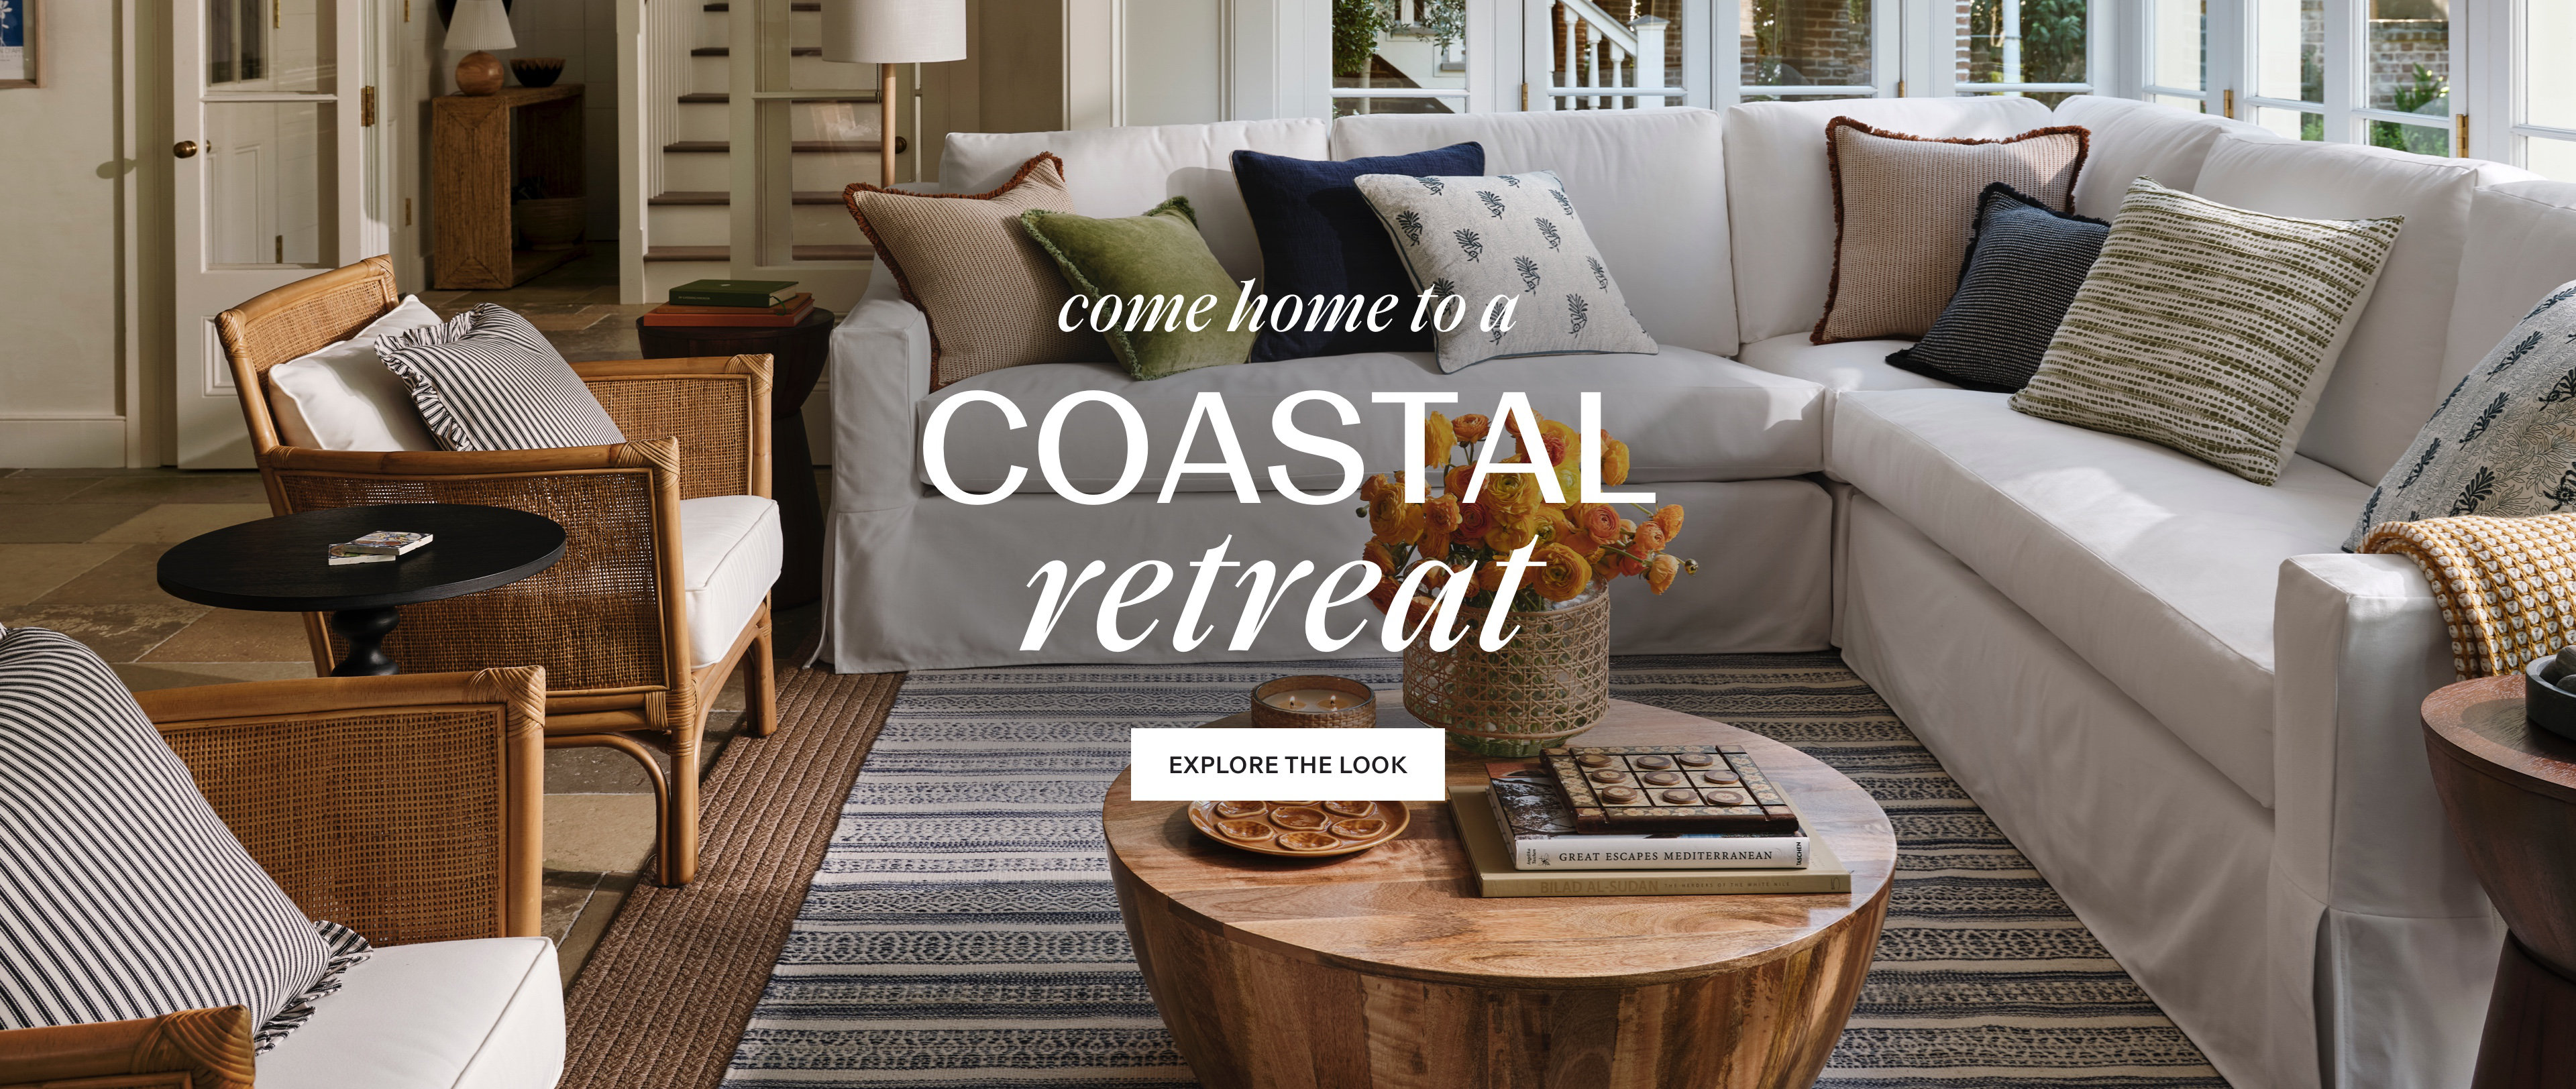 come home to a coastal retreat